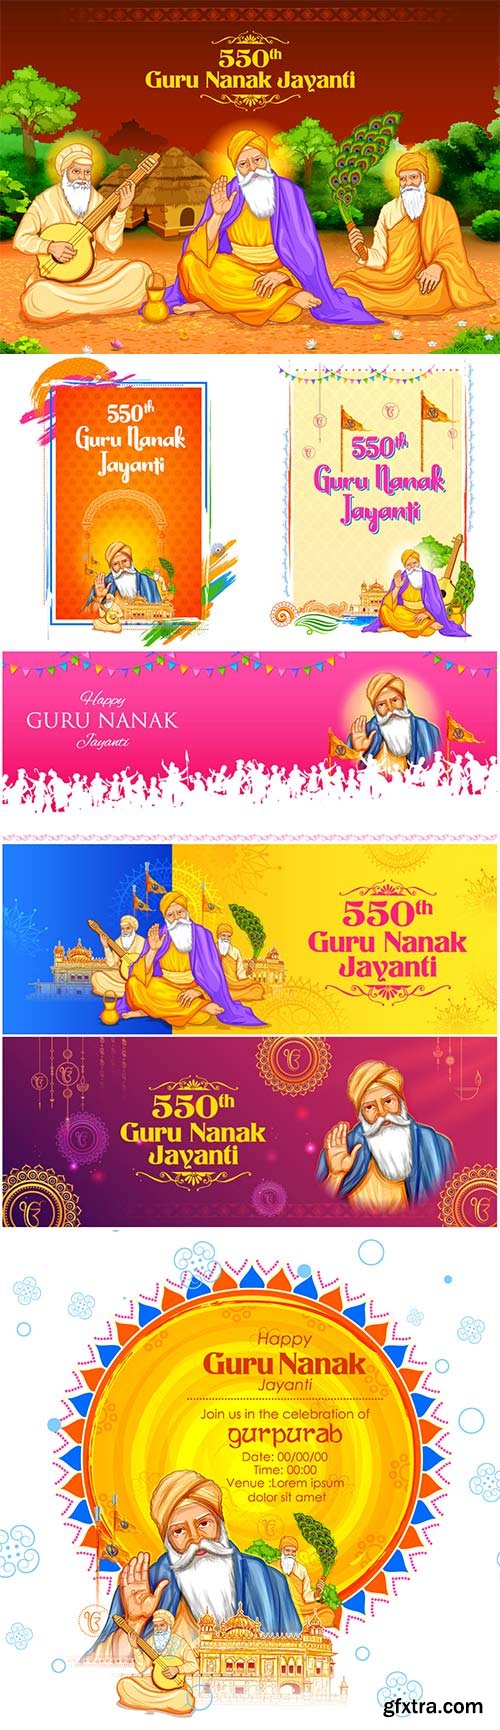 Happy Gurpurab, Guru Nanak Jayanti festival of Sikh celebration